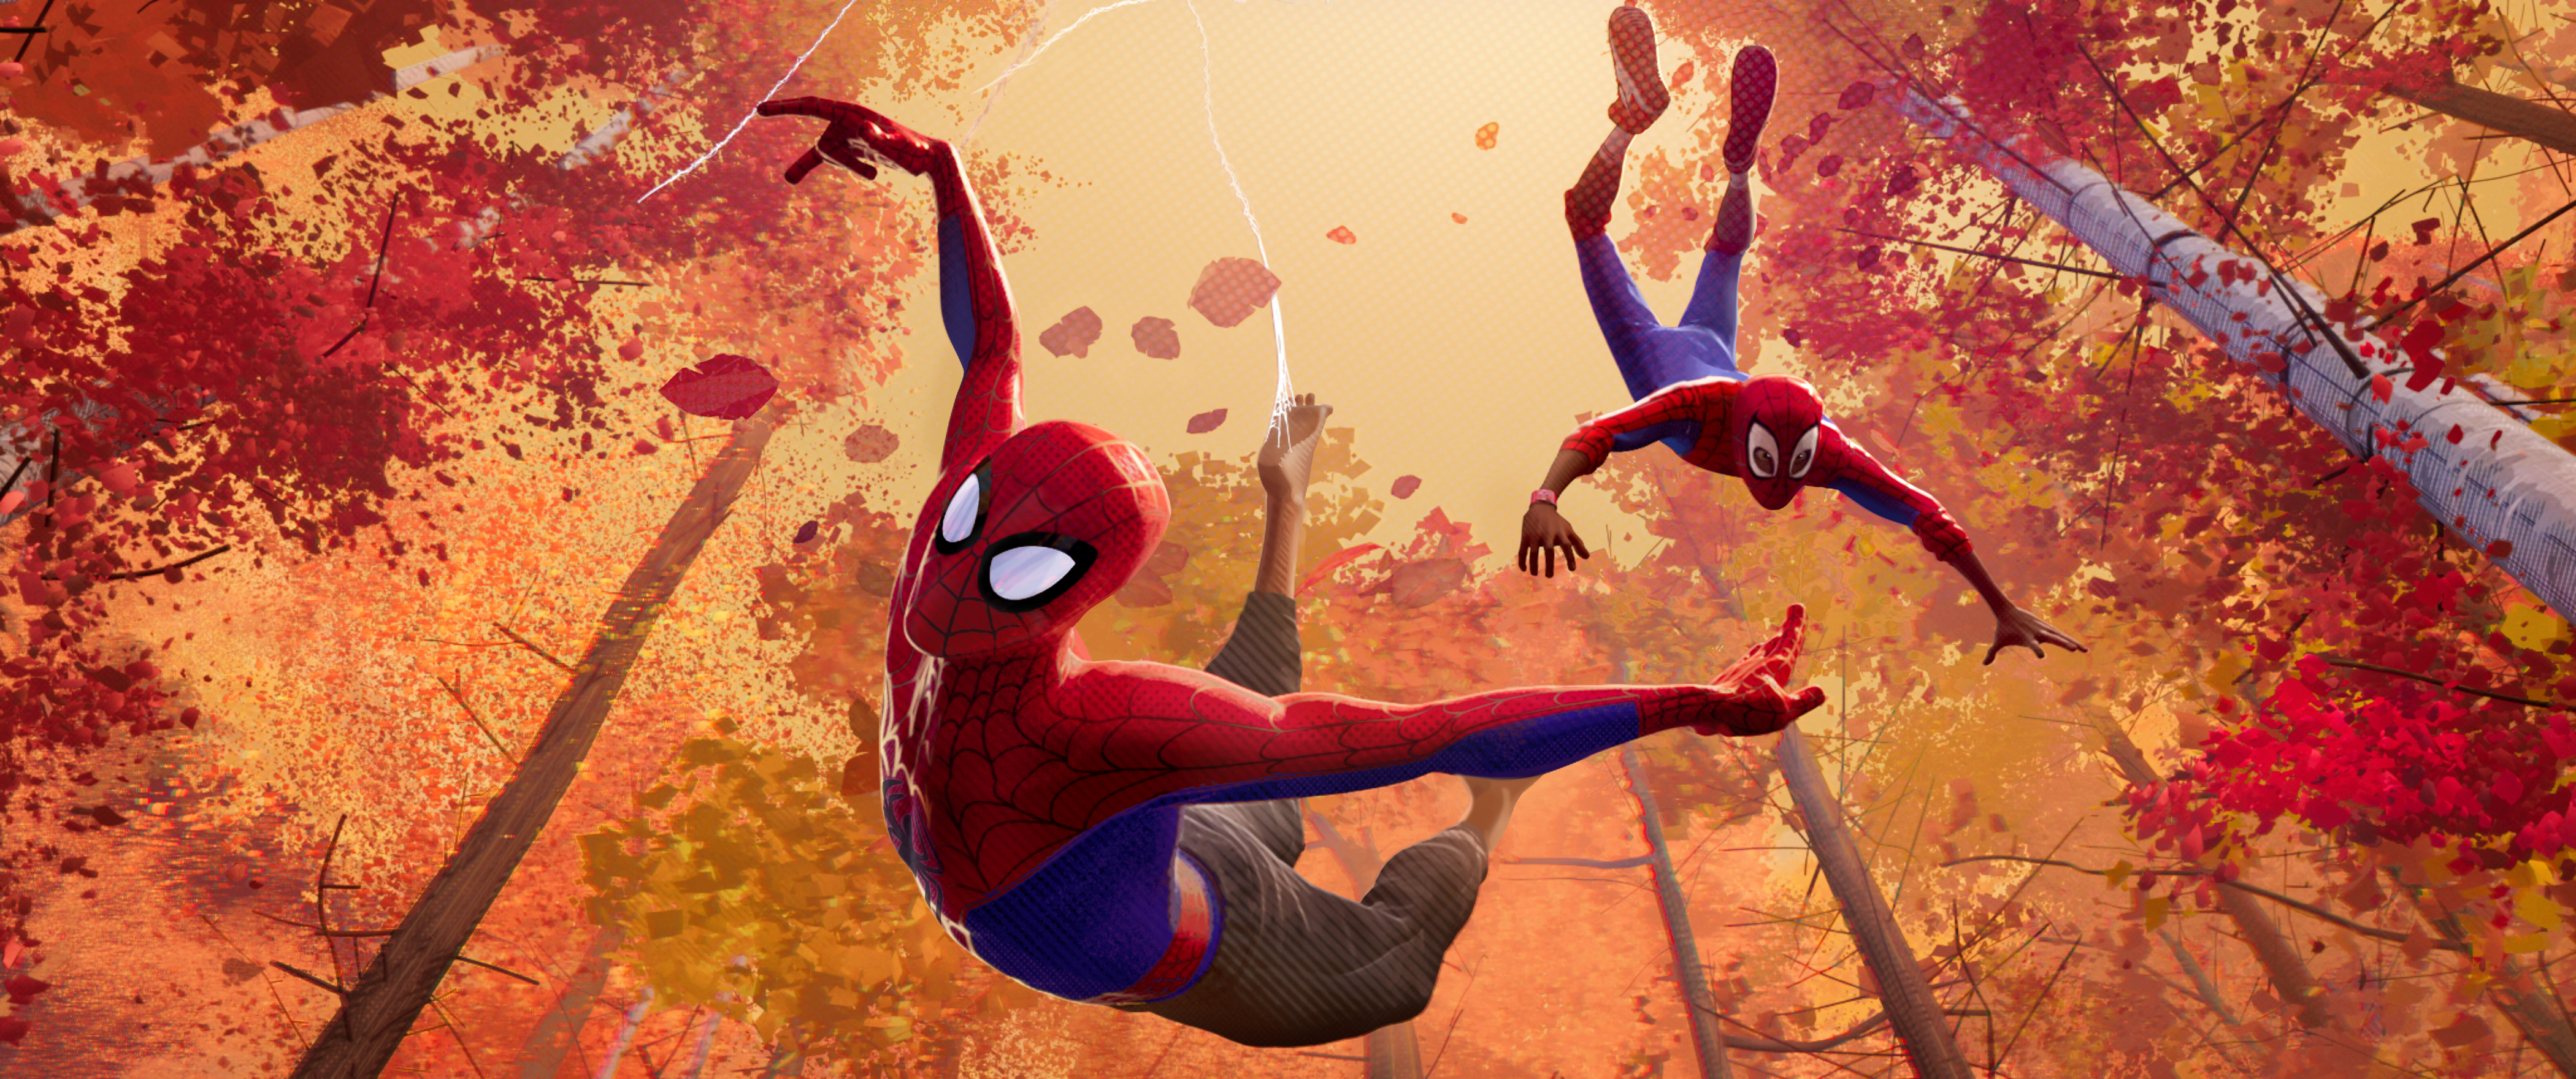 Spider-Man: Into The Spider-Verse still (Sony Pictures)